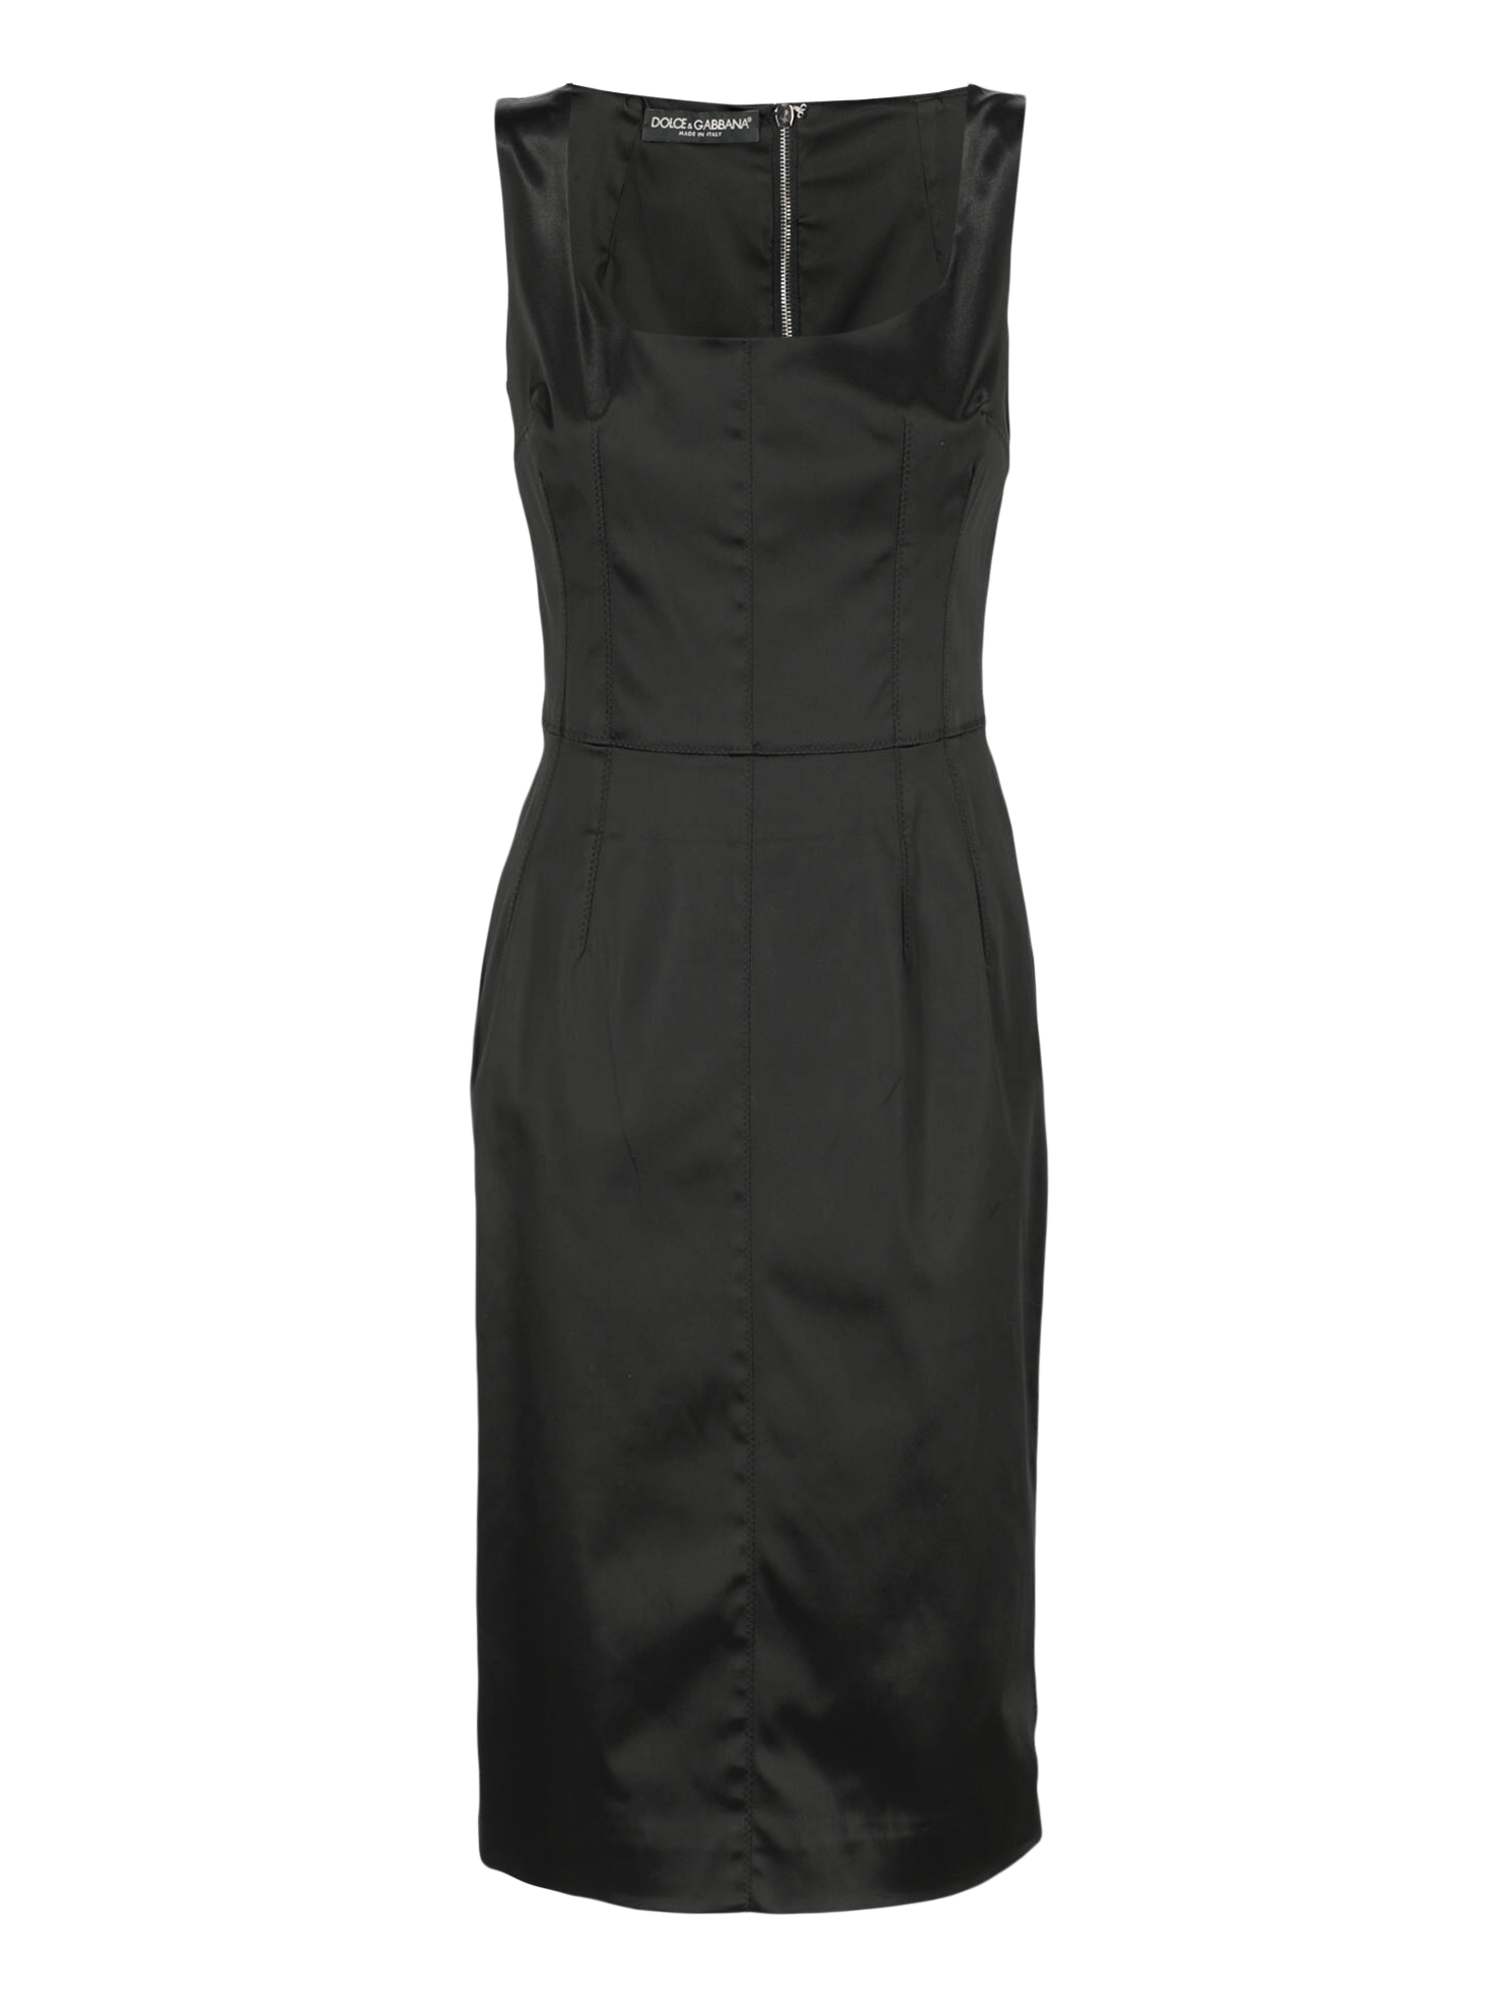 Robes Pour Femme - Dolce & Gabbana - En Fabric Black - Taille:  -